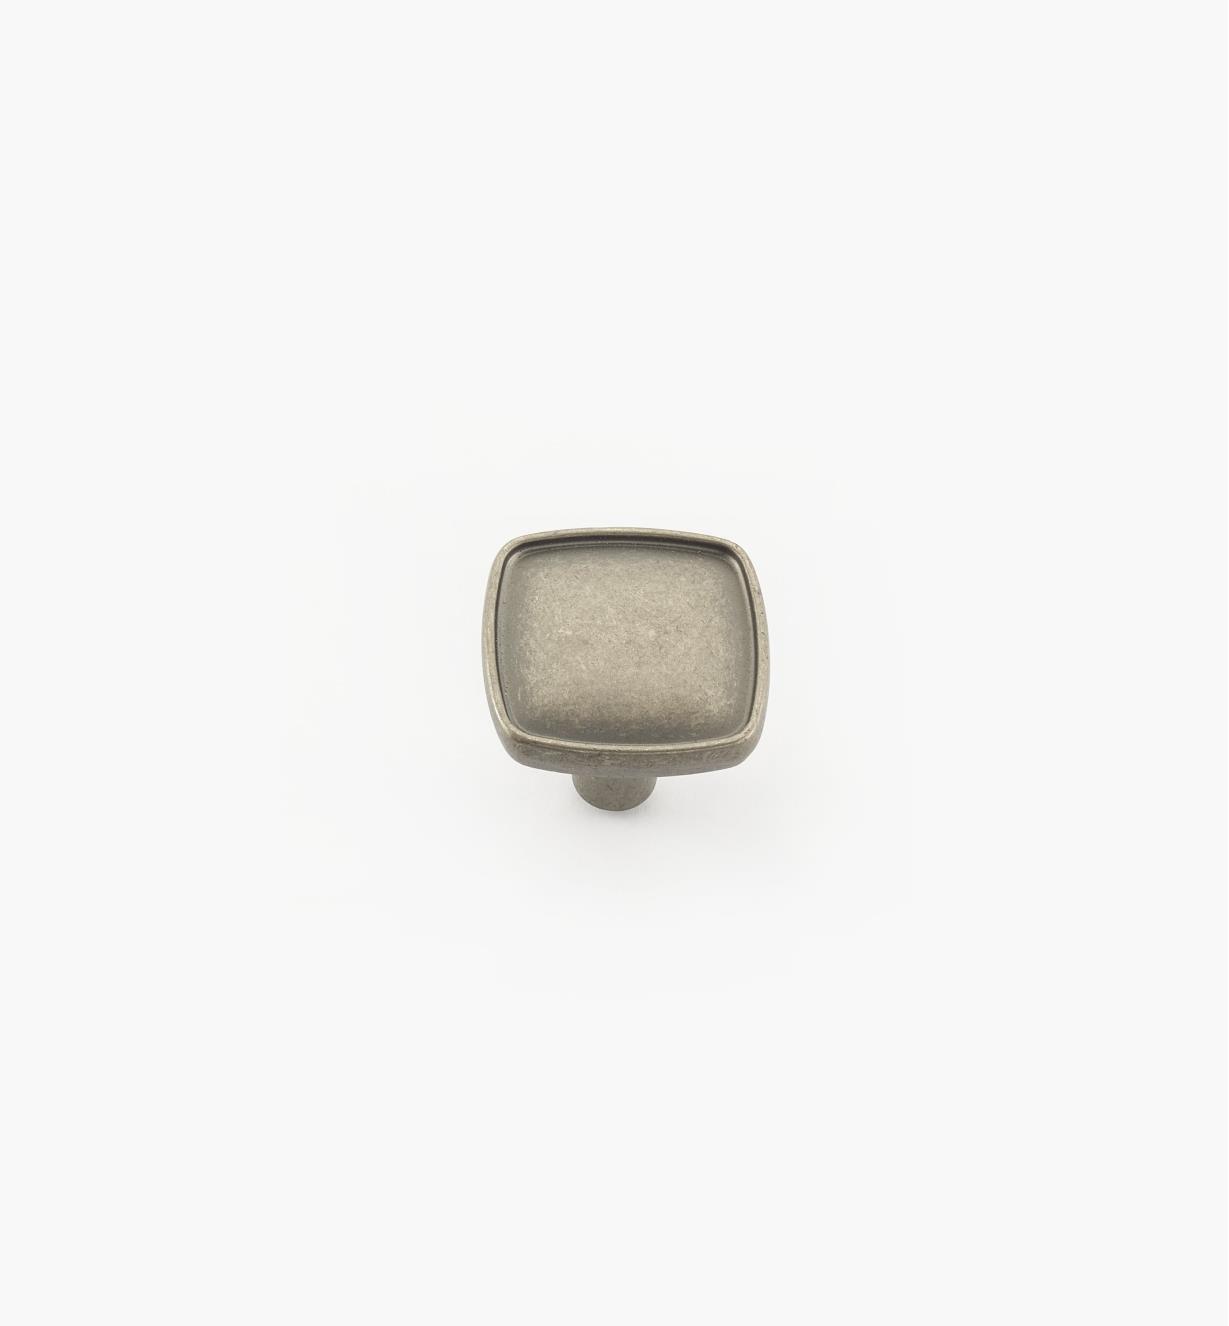 02A4338 - Bouton carré de 1 1/8 po x 1 po, série Porter, fini nickel vieilli